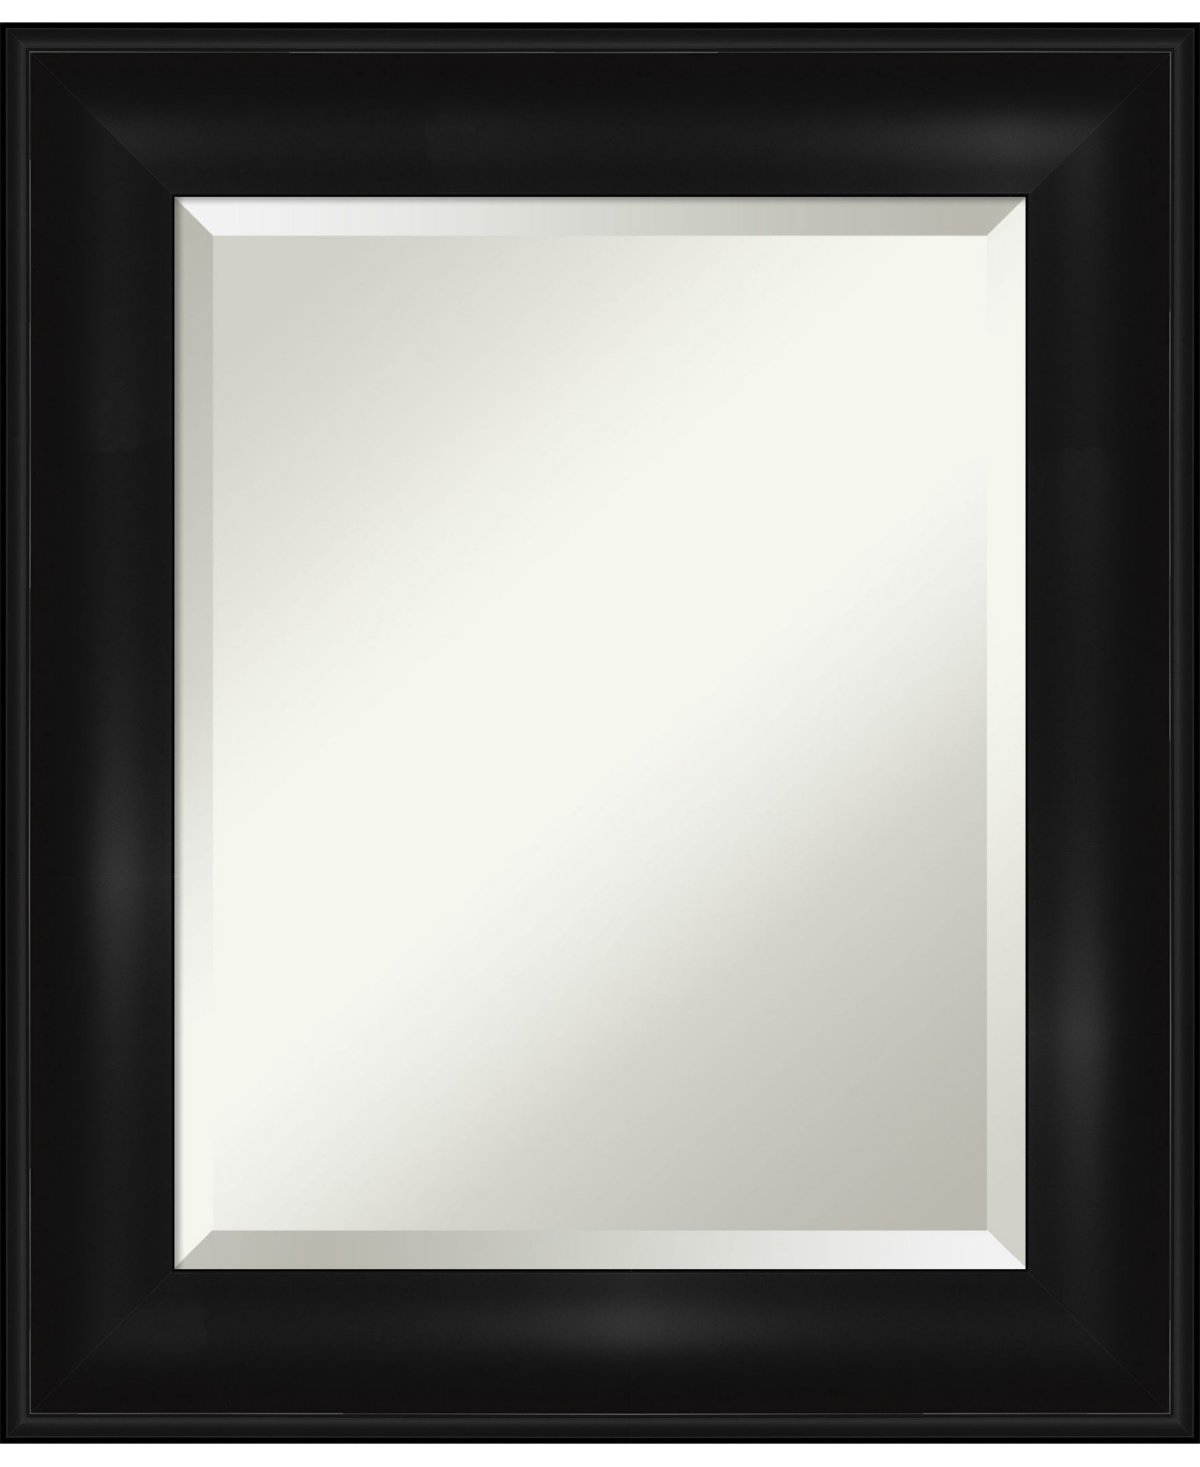 Grand Framed Bathroom Vanity Wall Mirror, 21.75" x 25.75" - Black